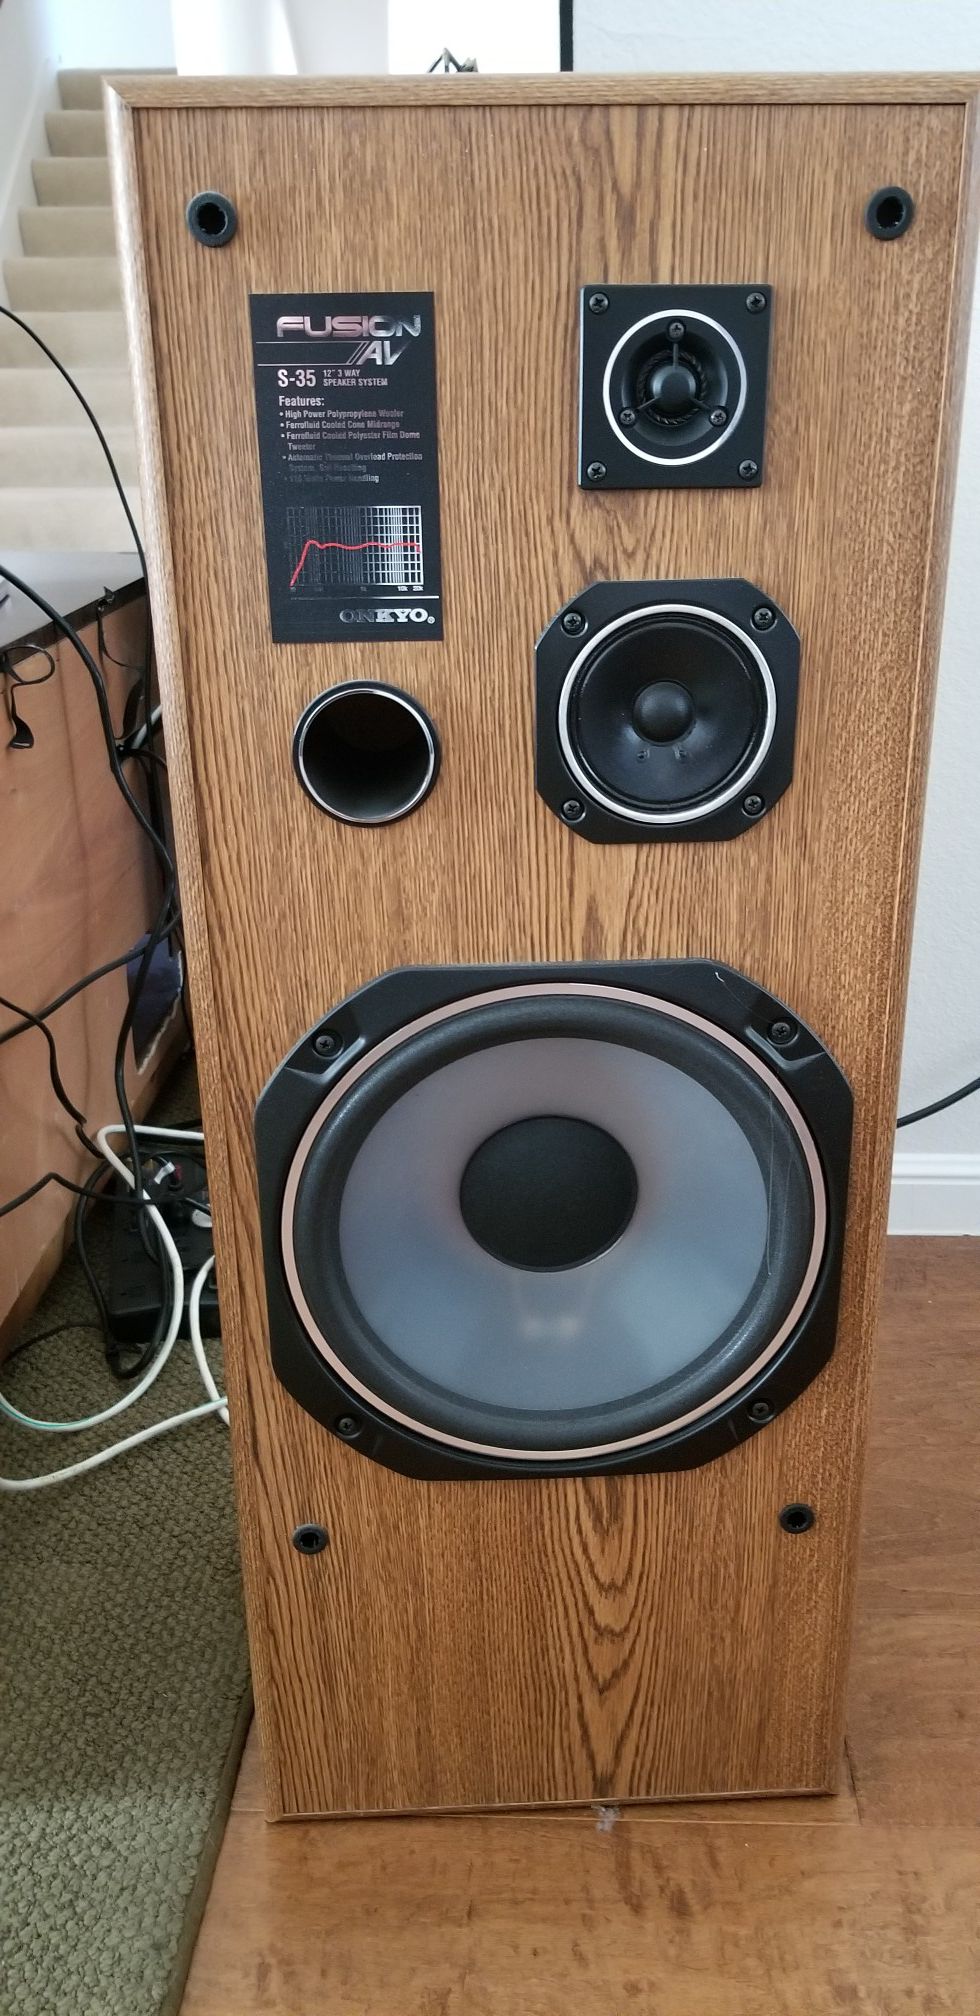 Onkyo Fusion S-35 Speakers (Pair)